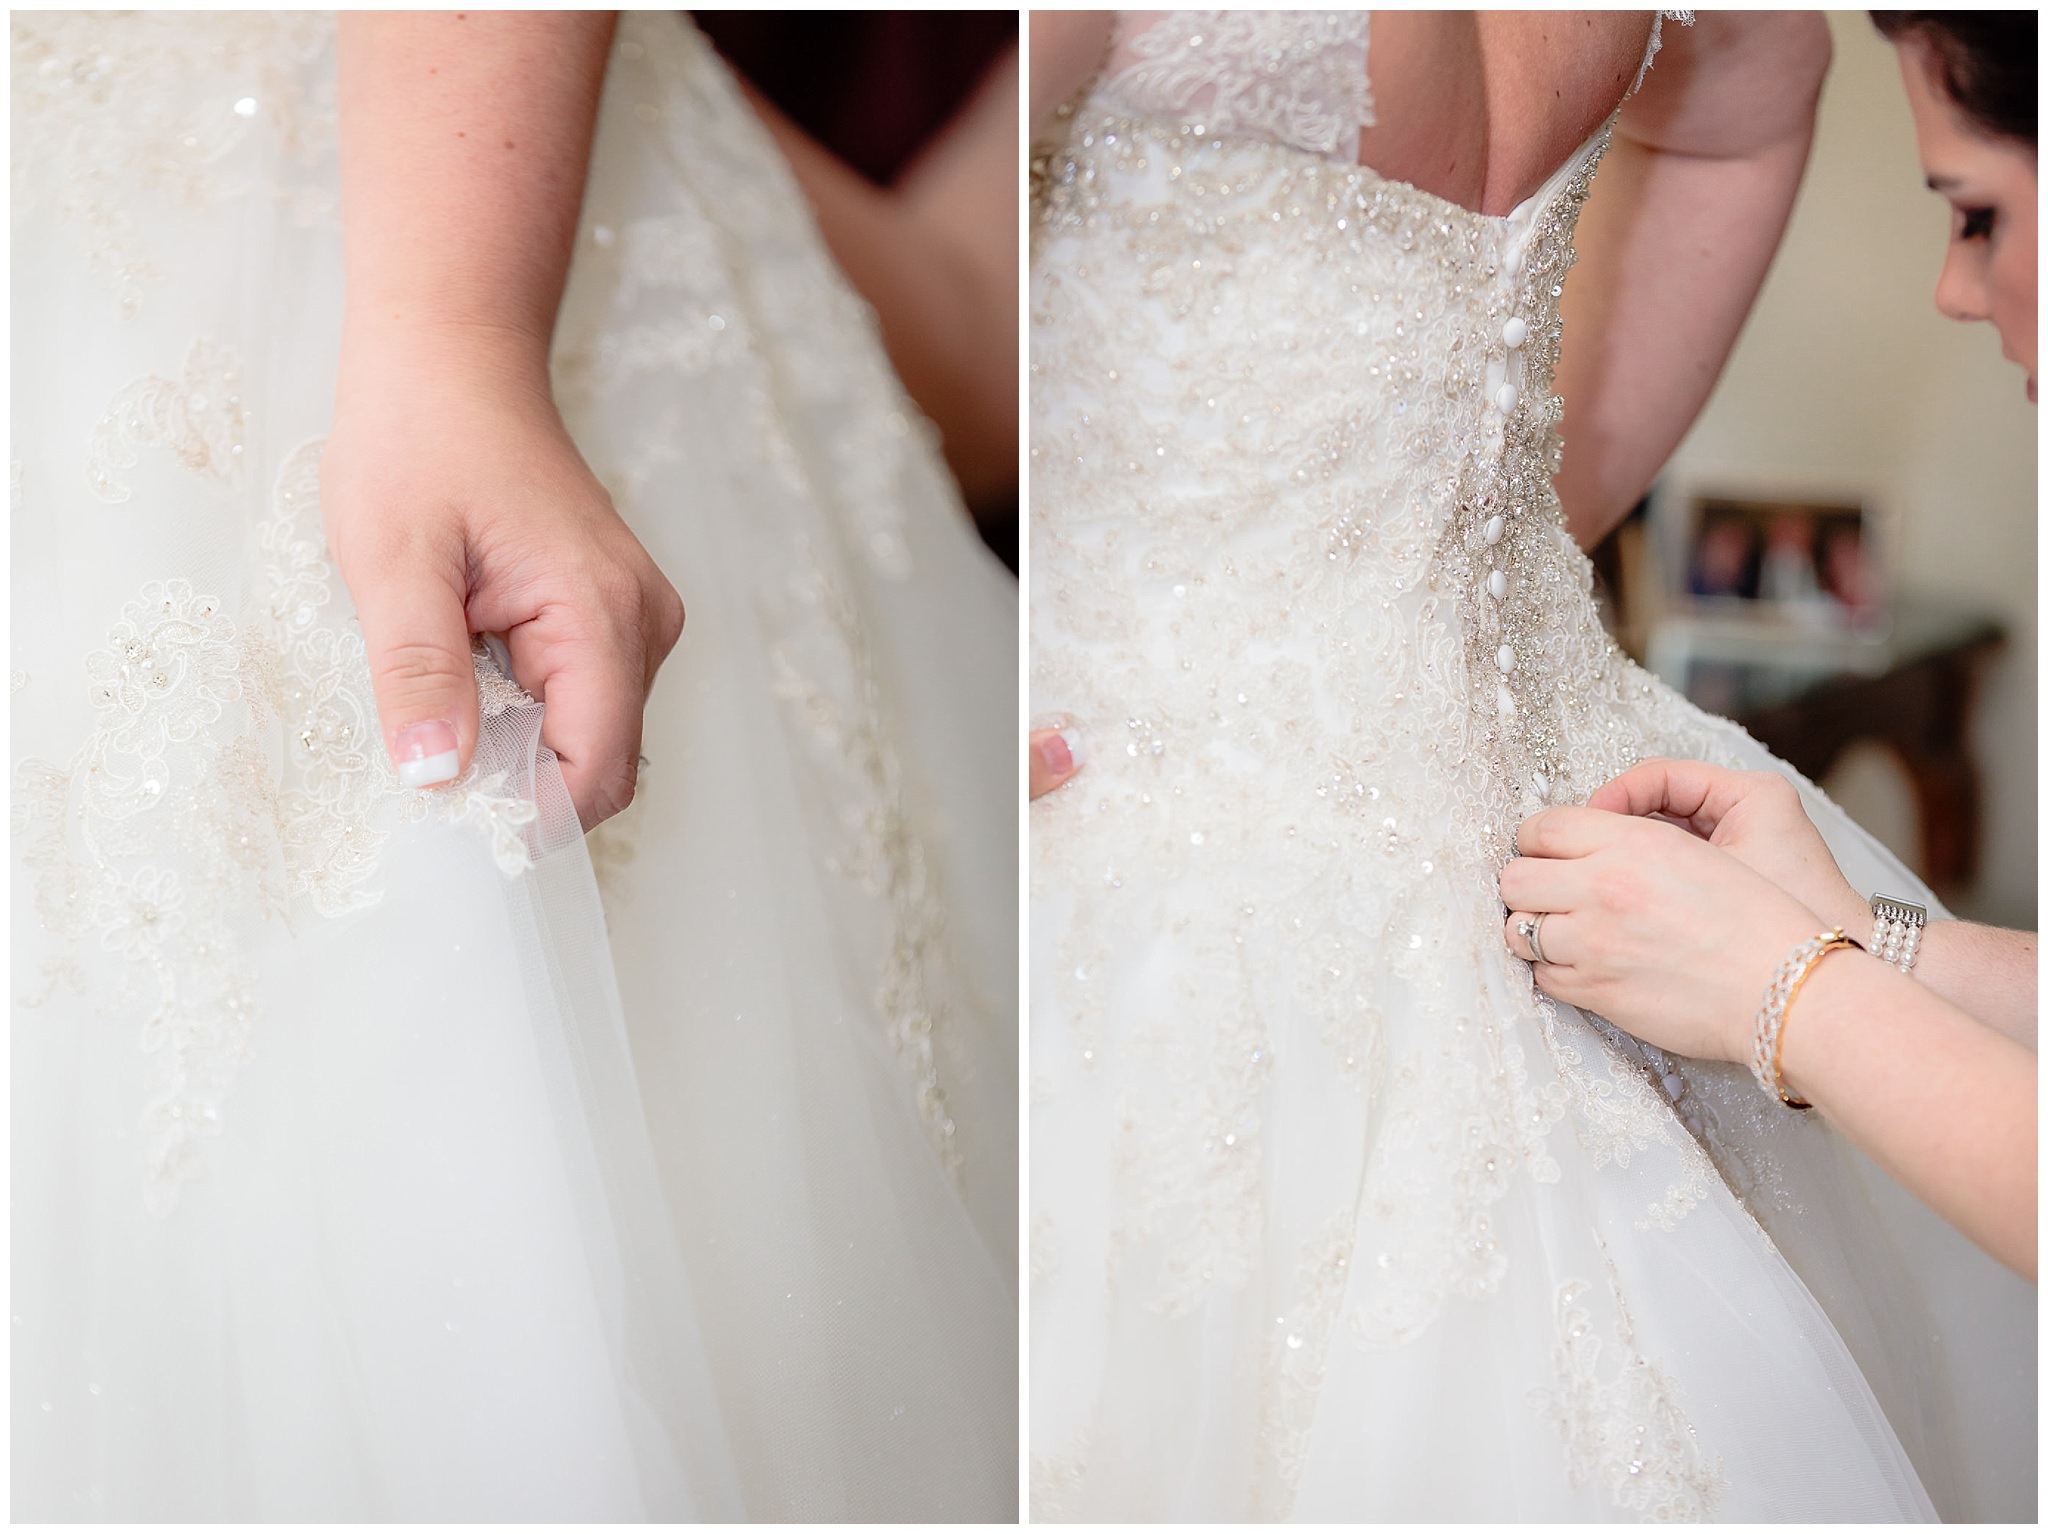 Details of an Allure wedding dress from Sorelle Bridal Salon